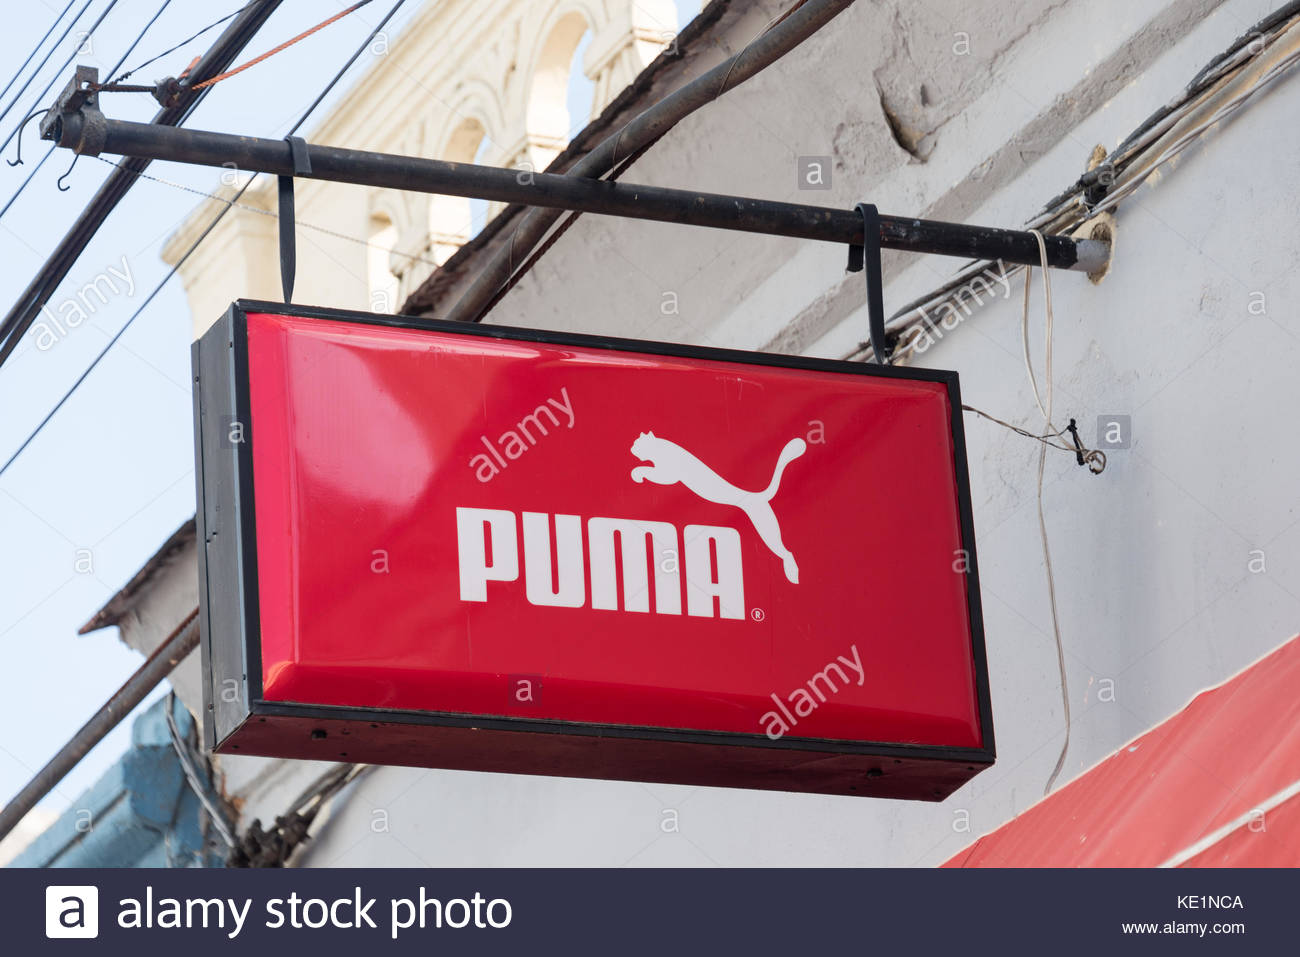 puma brand name